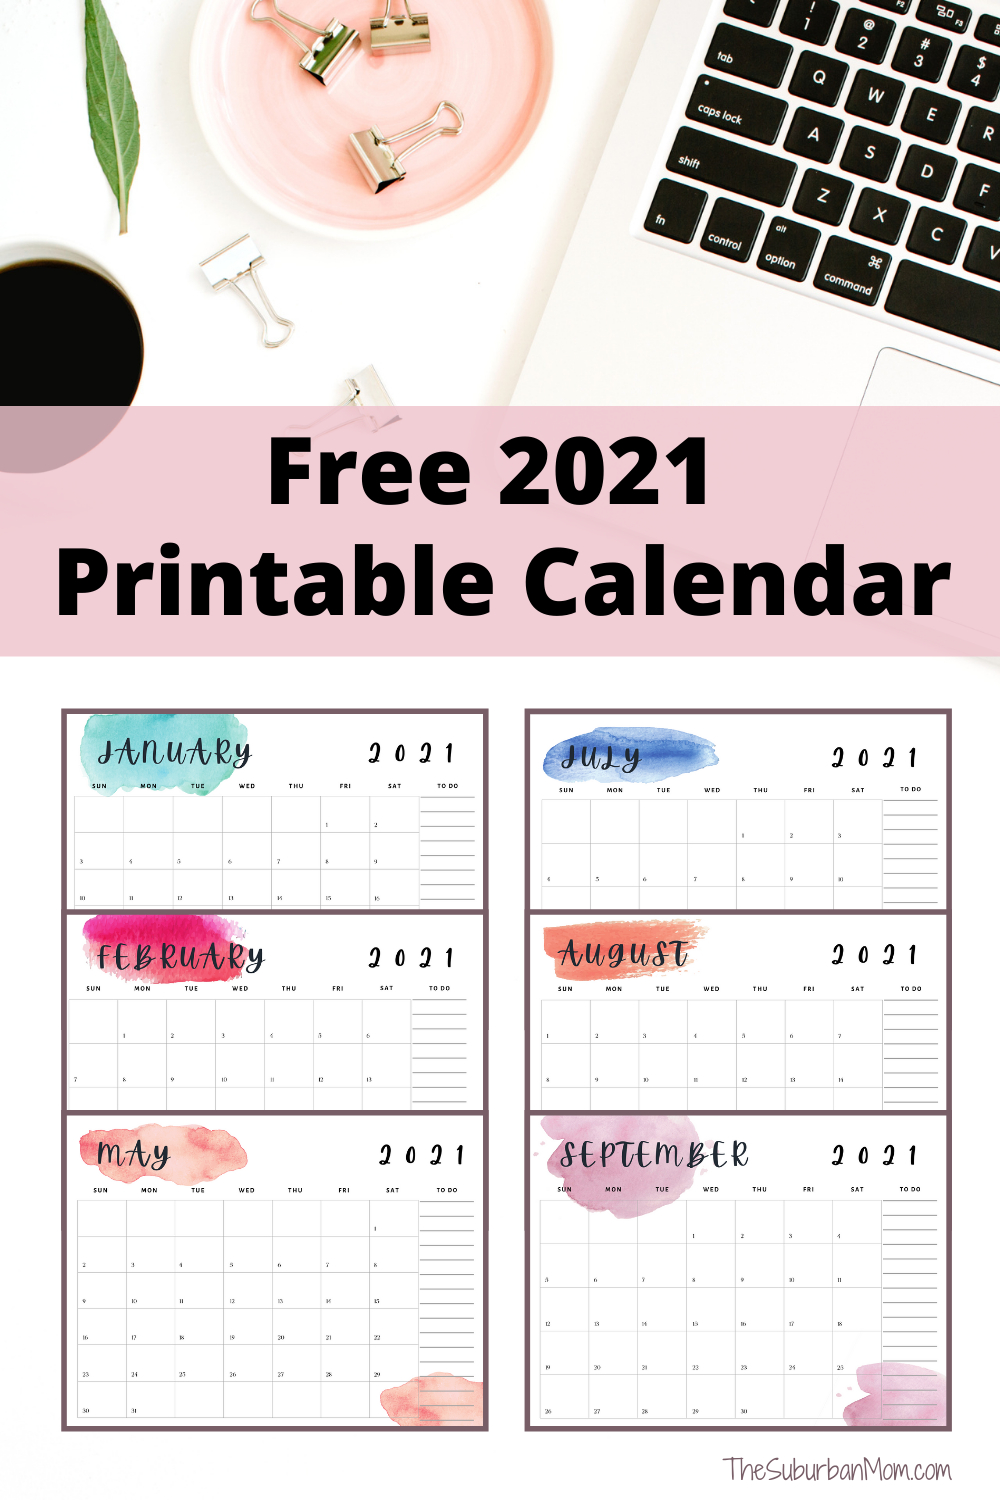 2021 Free Printable Calendar - The Suburban Mom-Printable Monthly Calendars Free 2021